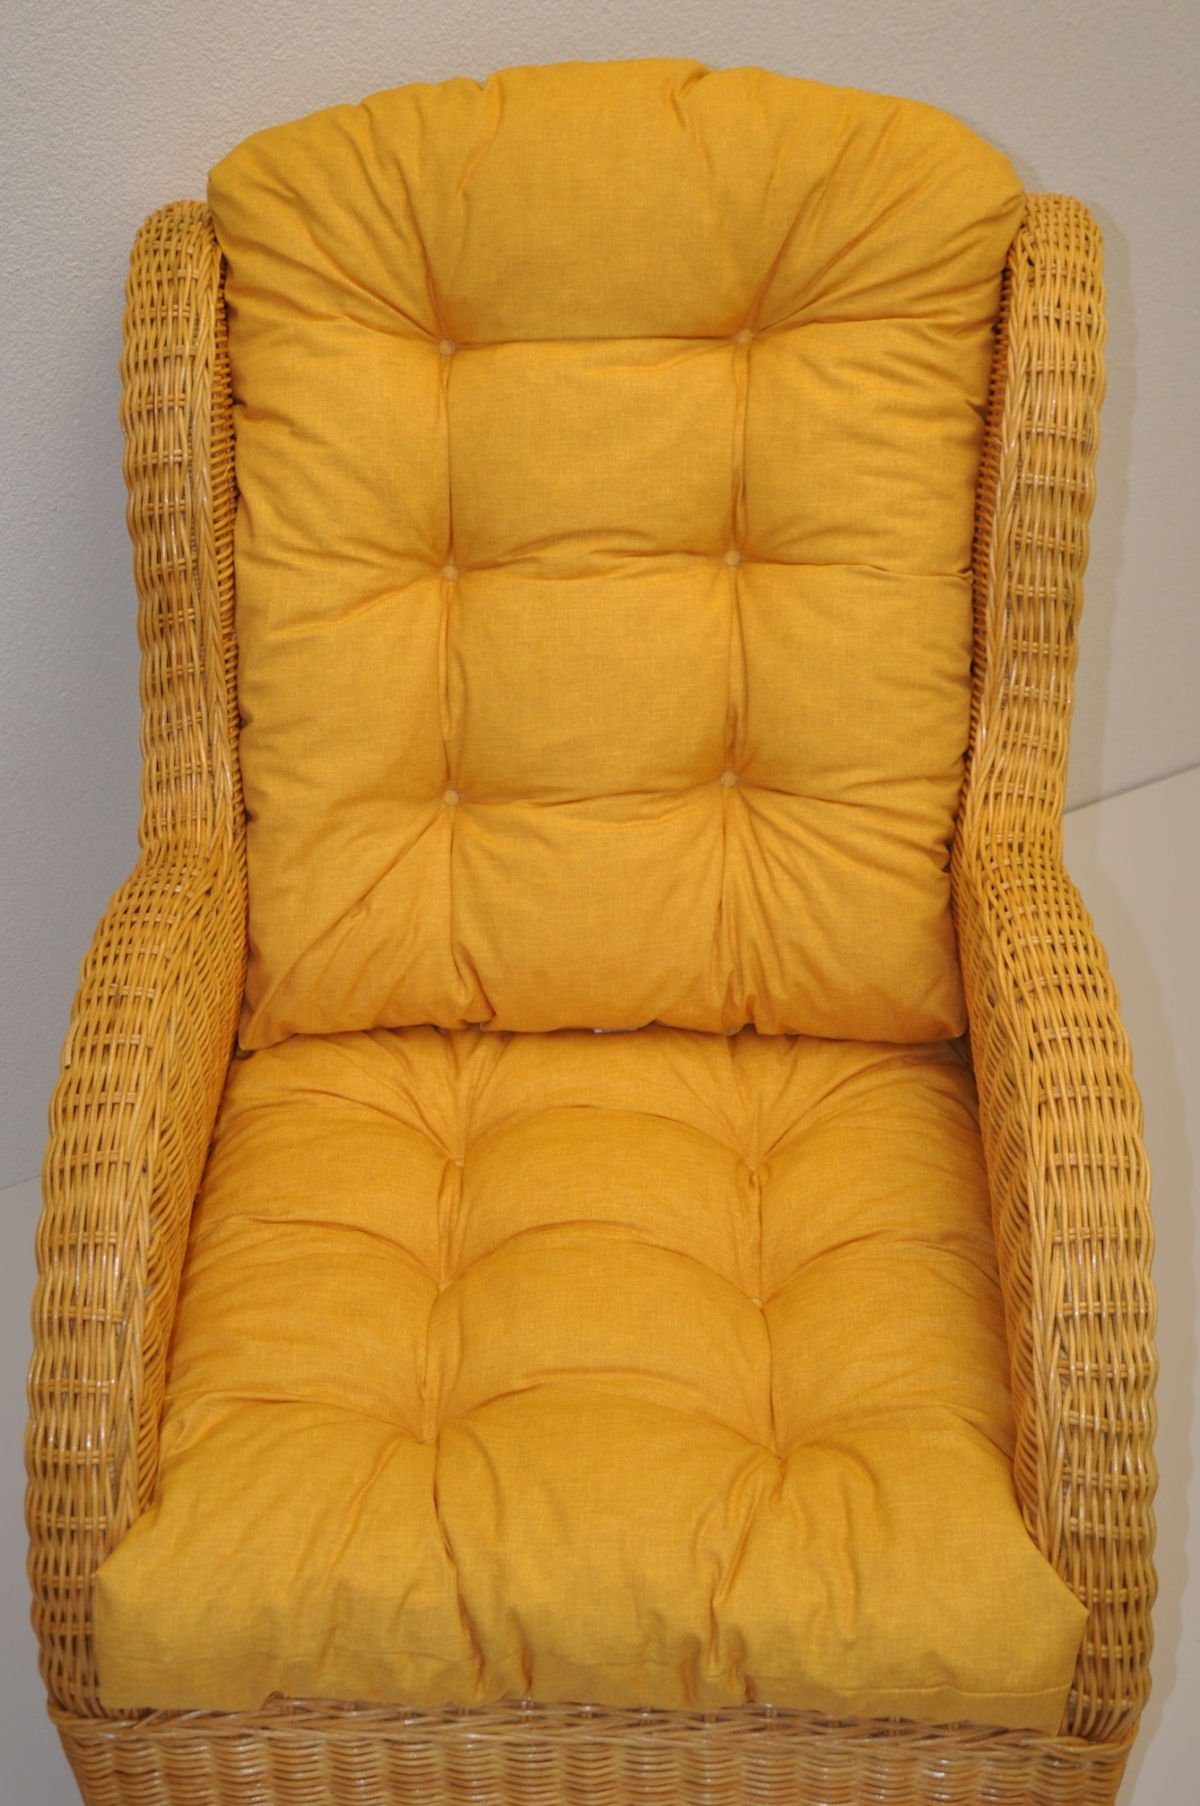 Rattani Sesselauflage Polster Kissen Color Ohrensessel Rattan gelb Rattansessel, für